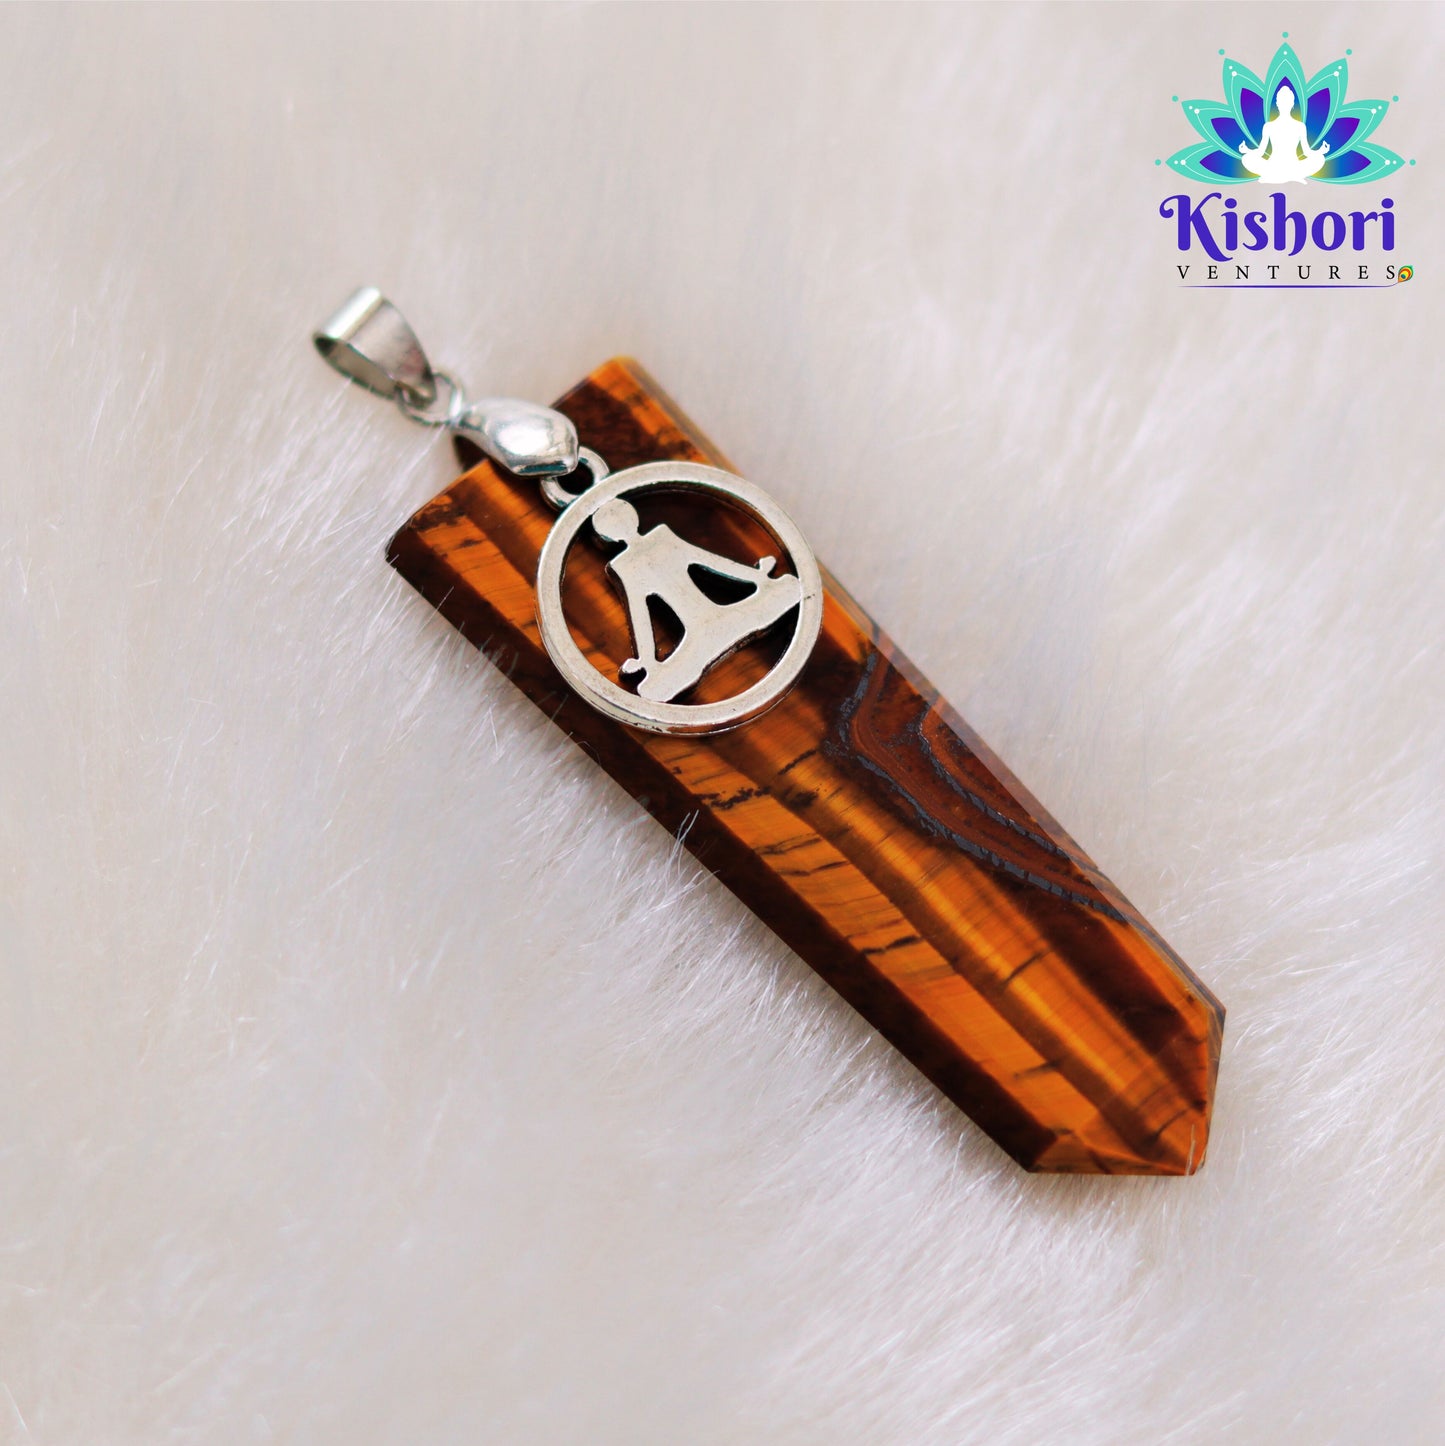 Kishori Ventures Mystical Tiger Eye Pendant - Unleash Inner Strength and Confidence